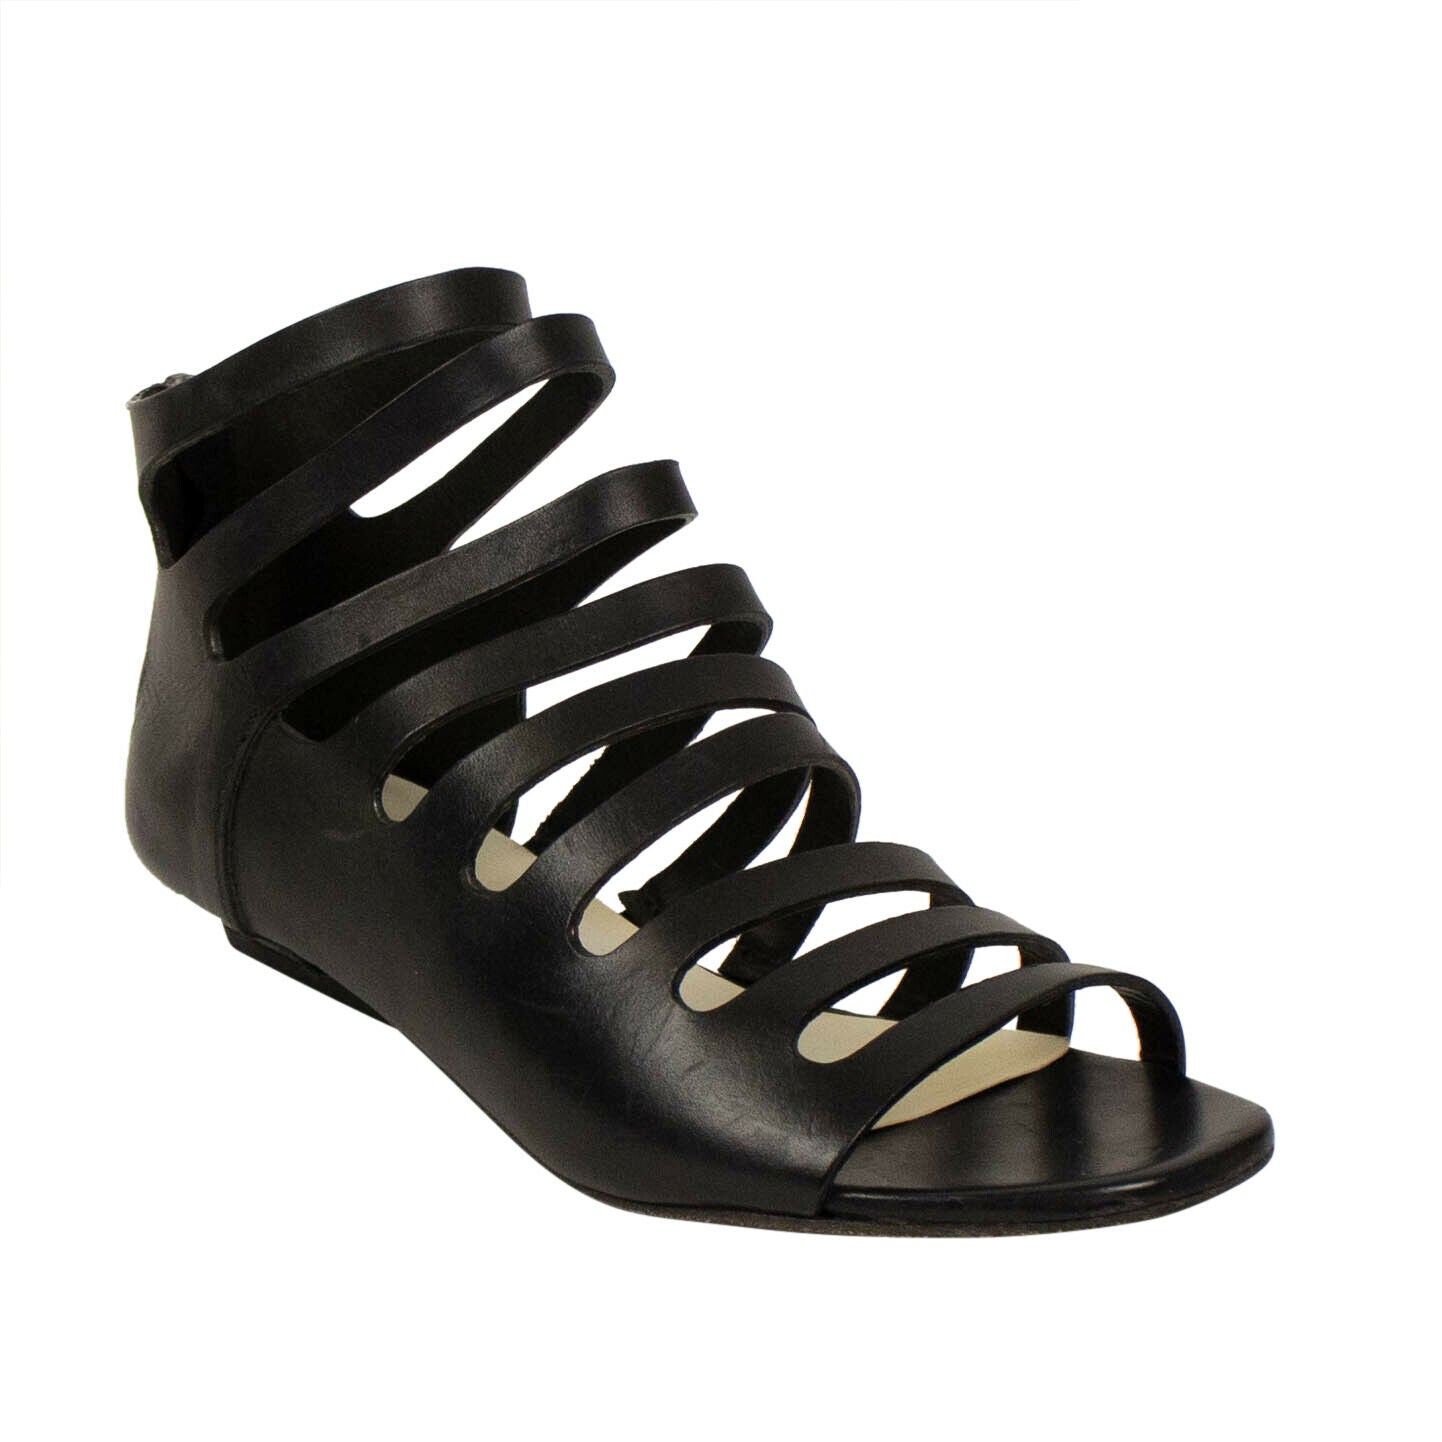 Marsell 'Sandaletto' Calf Skin Leather Heels Sandals - Black